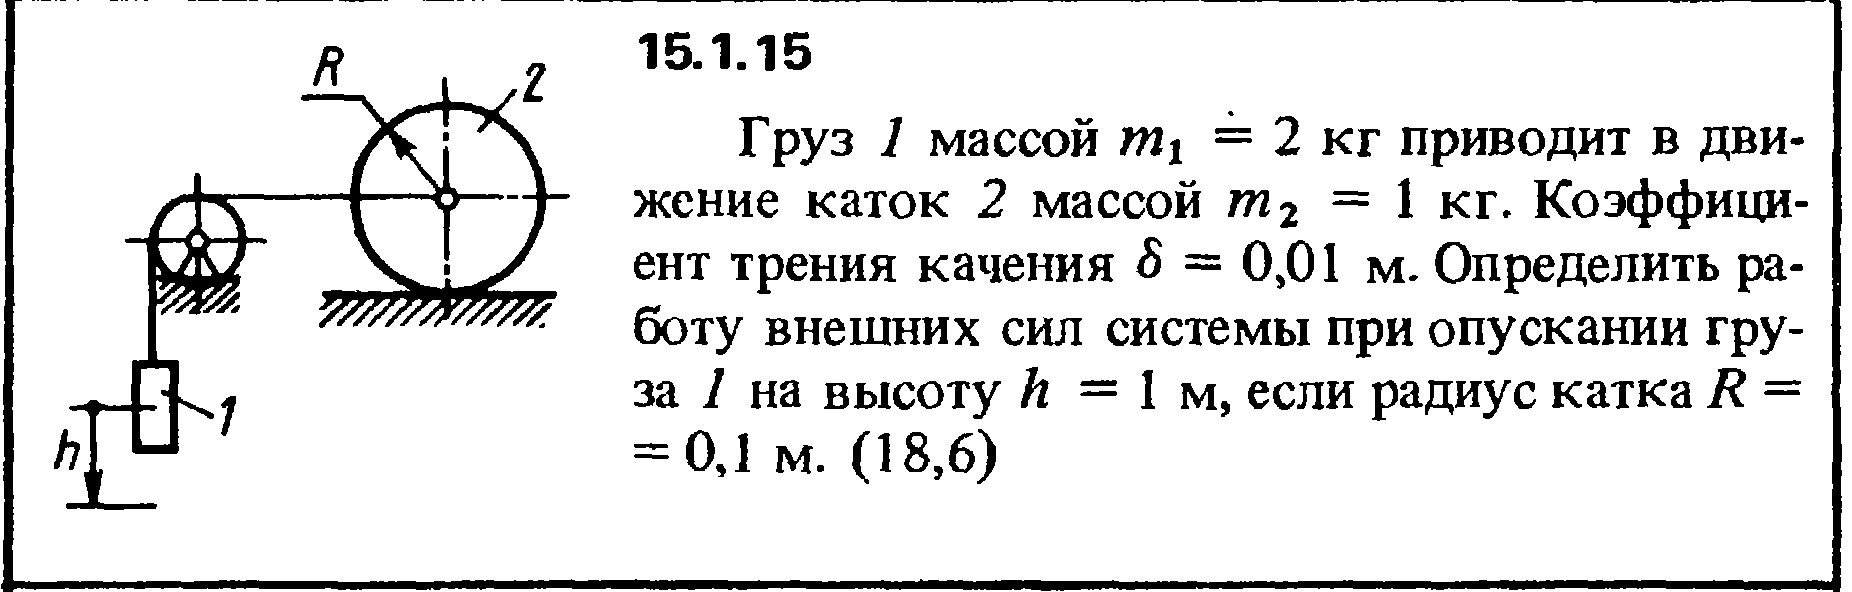 Решение задачи 15.1.15 из сборника Кепе О.Е. 1989 года